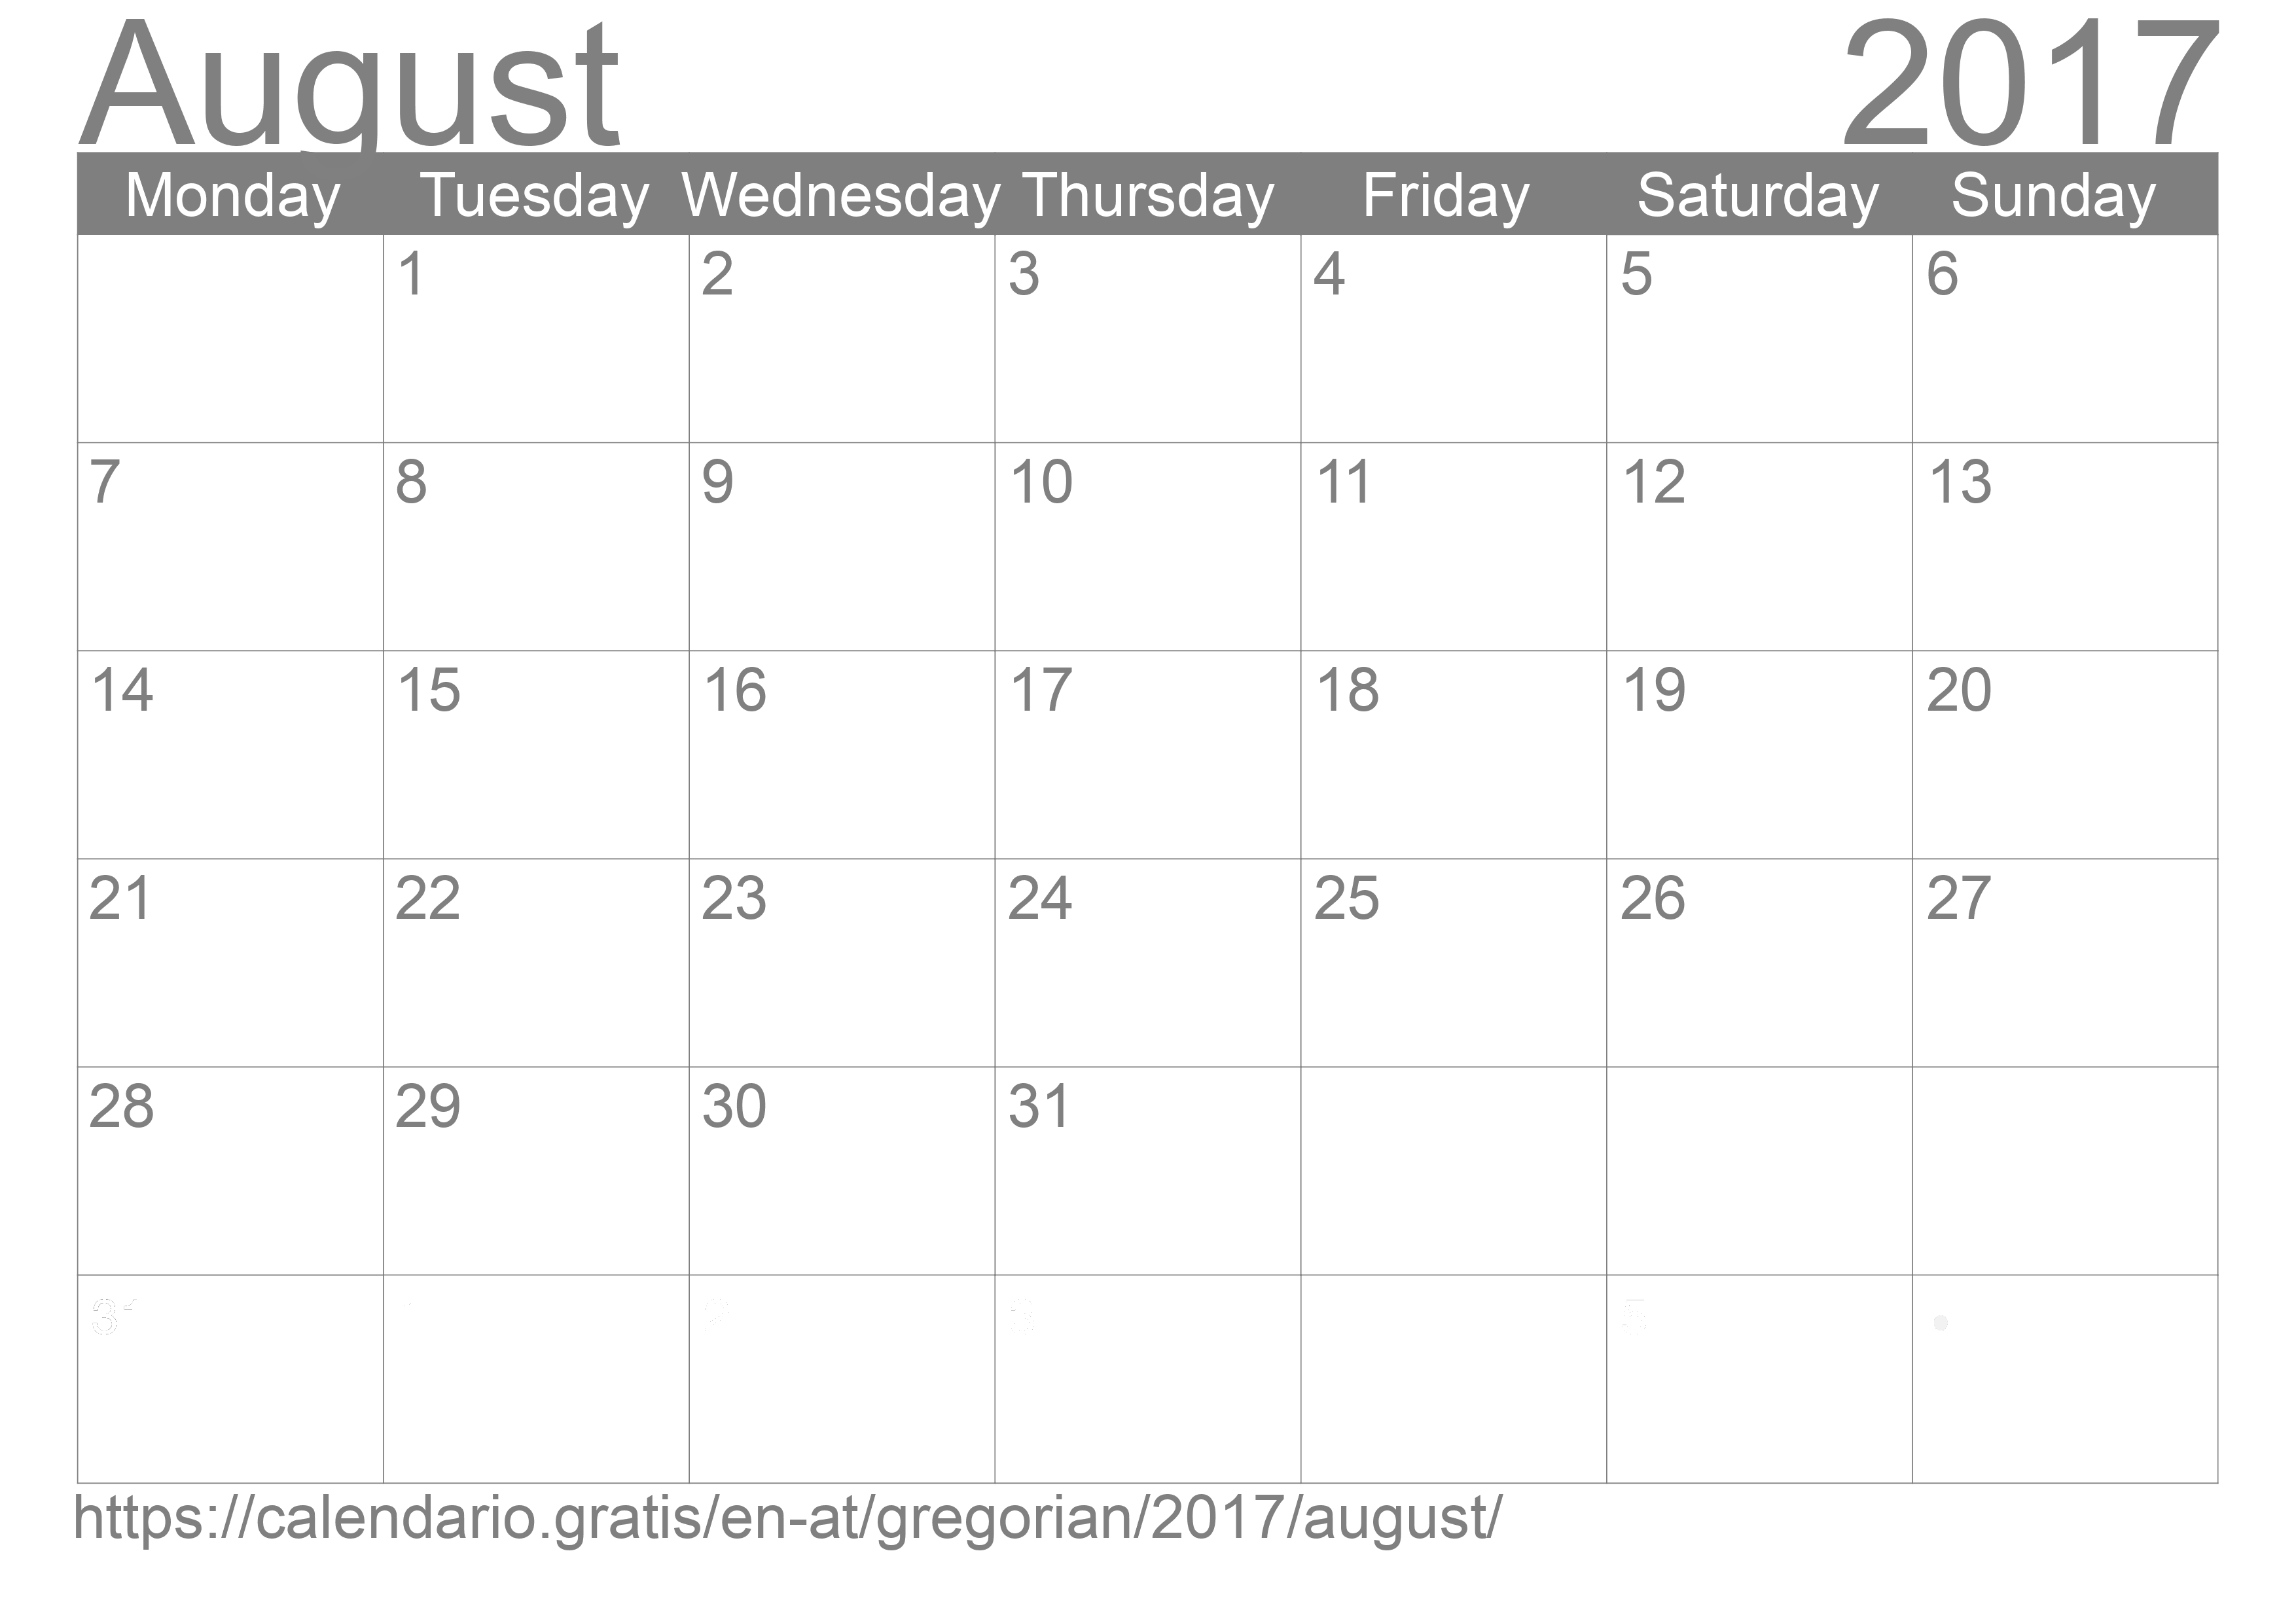 Calendar August 2017 to print